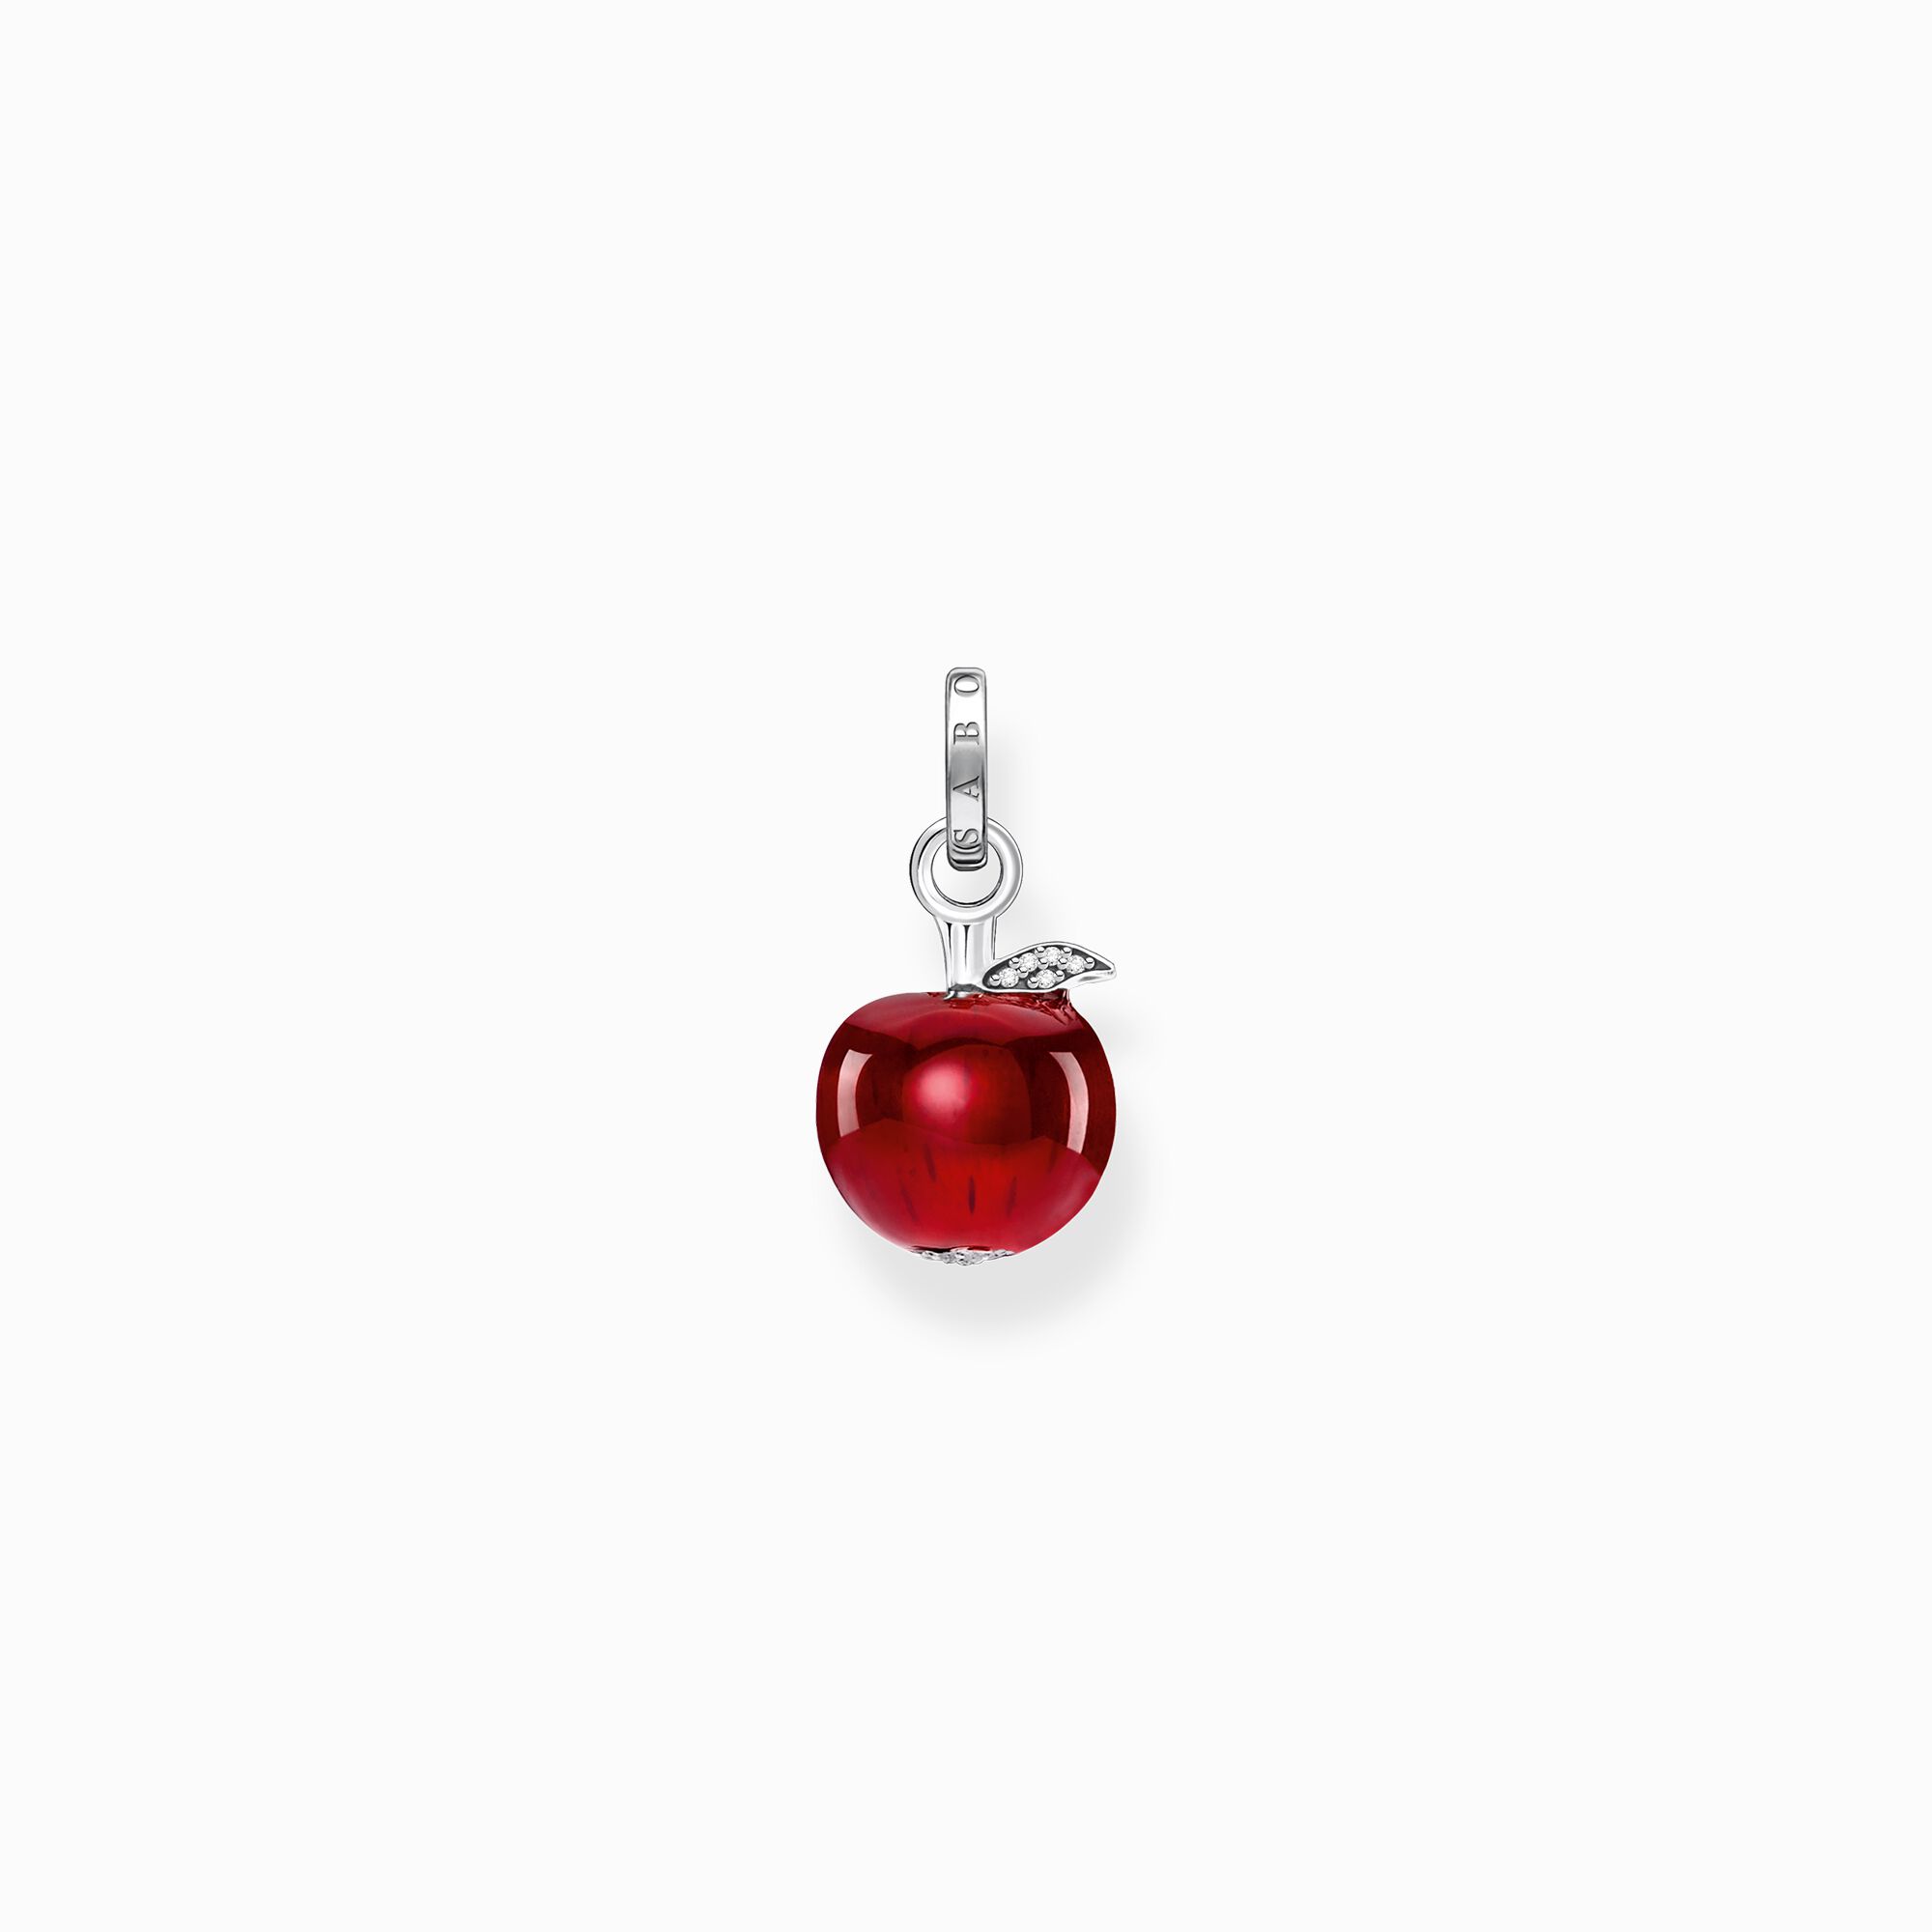 Kettenanhänger für Damen: Apfel in Rot – THOMAS SABO